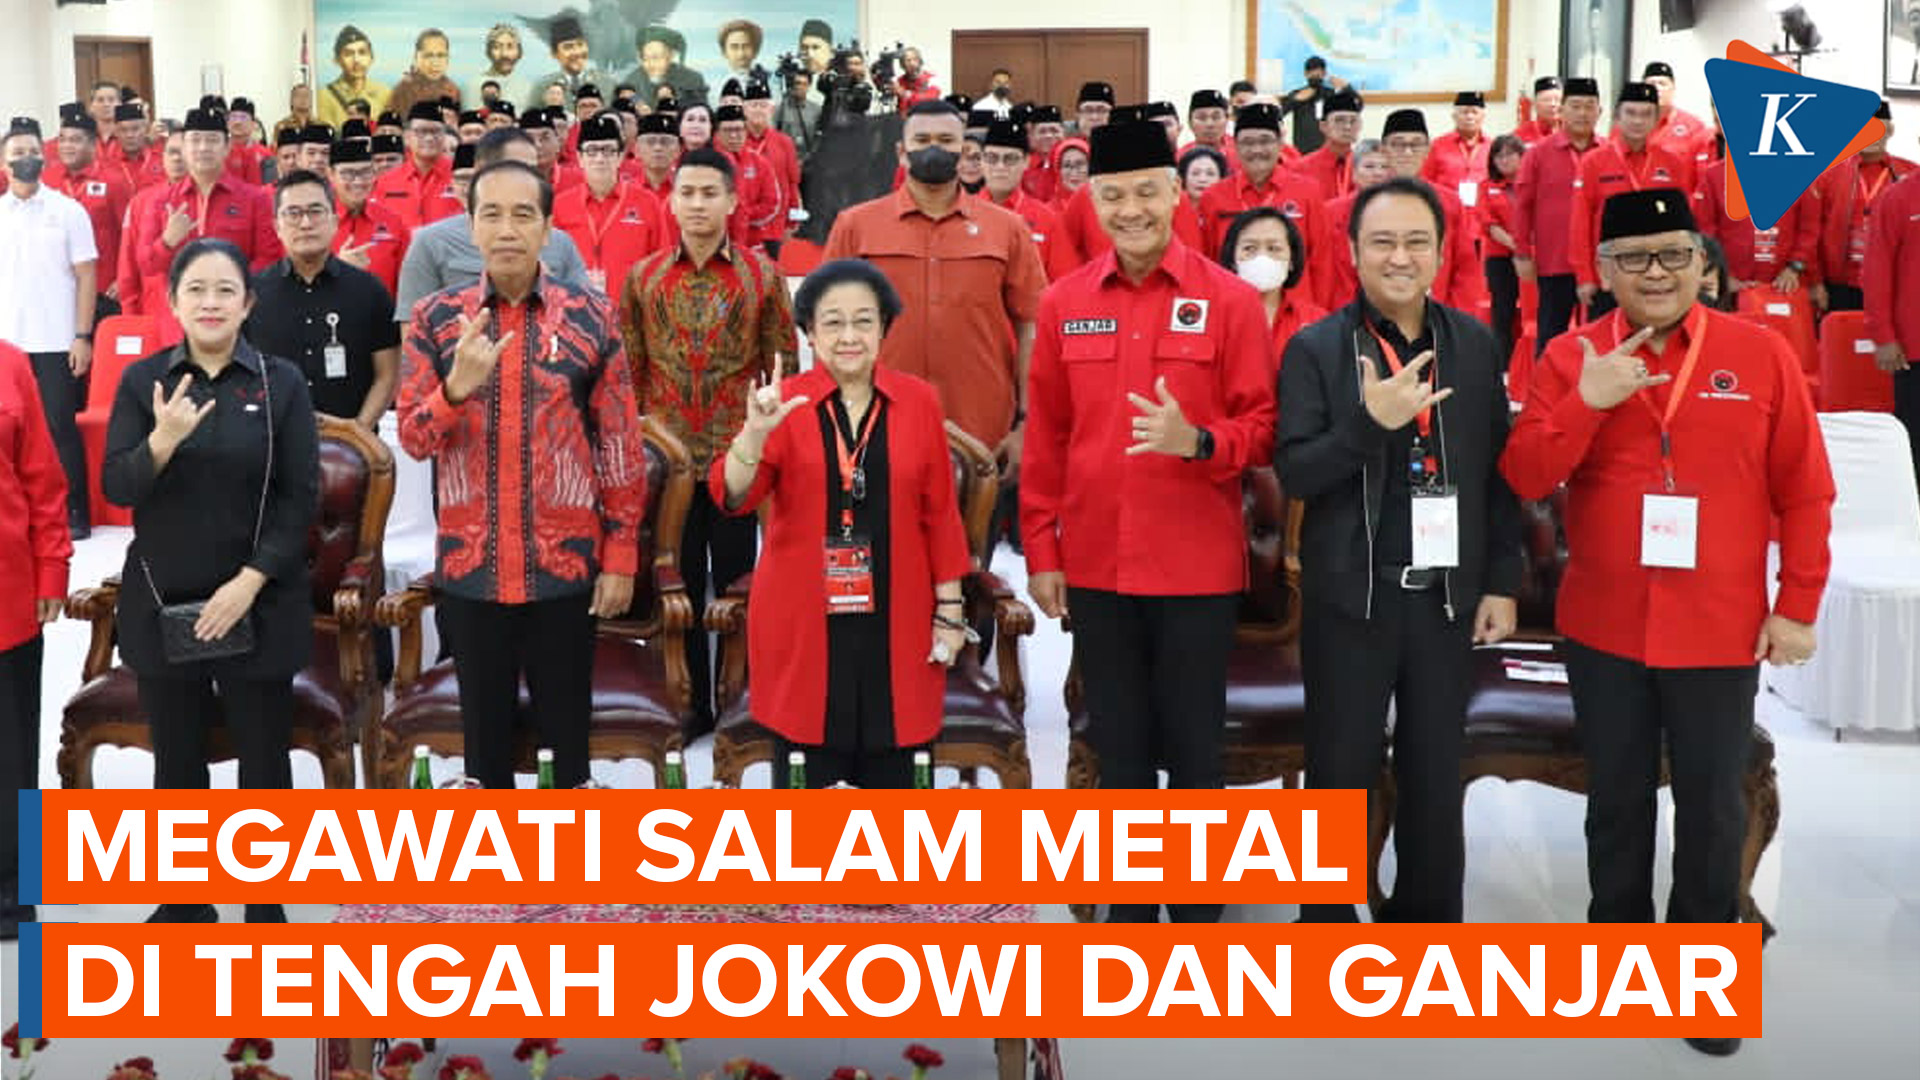 Megawati, Jokowi dan Ganjar Kompak Salam Metal di Rakernas III PDI-P